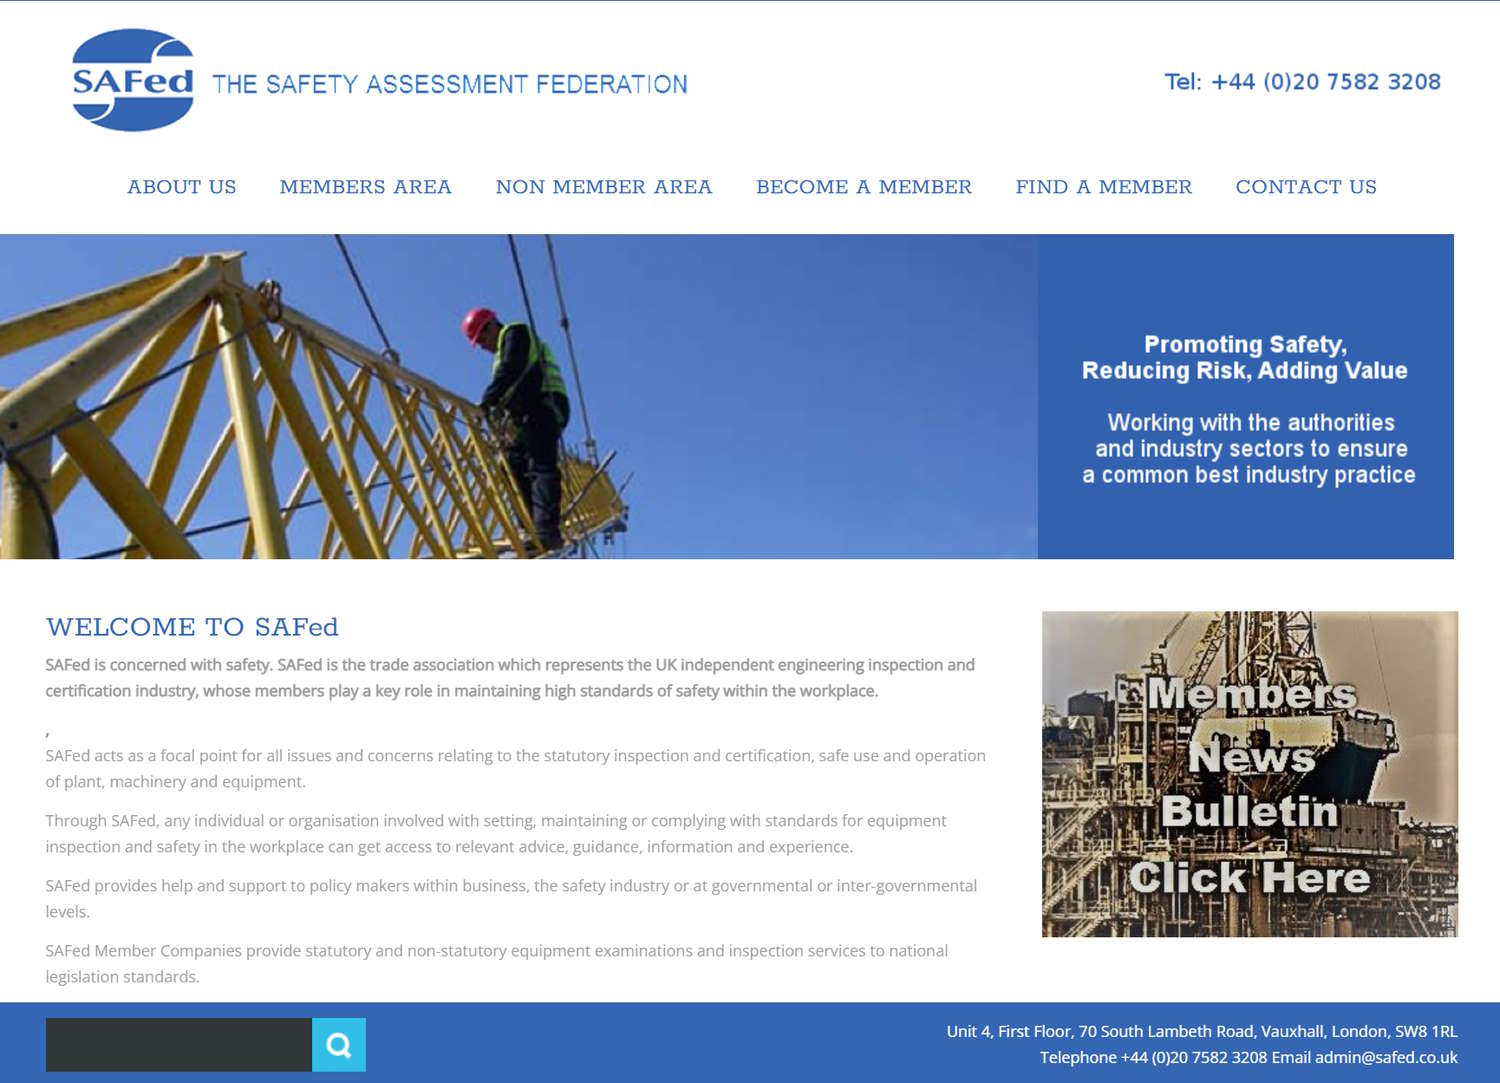 The original SAFed website design